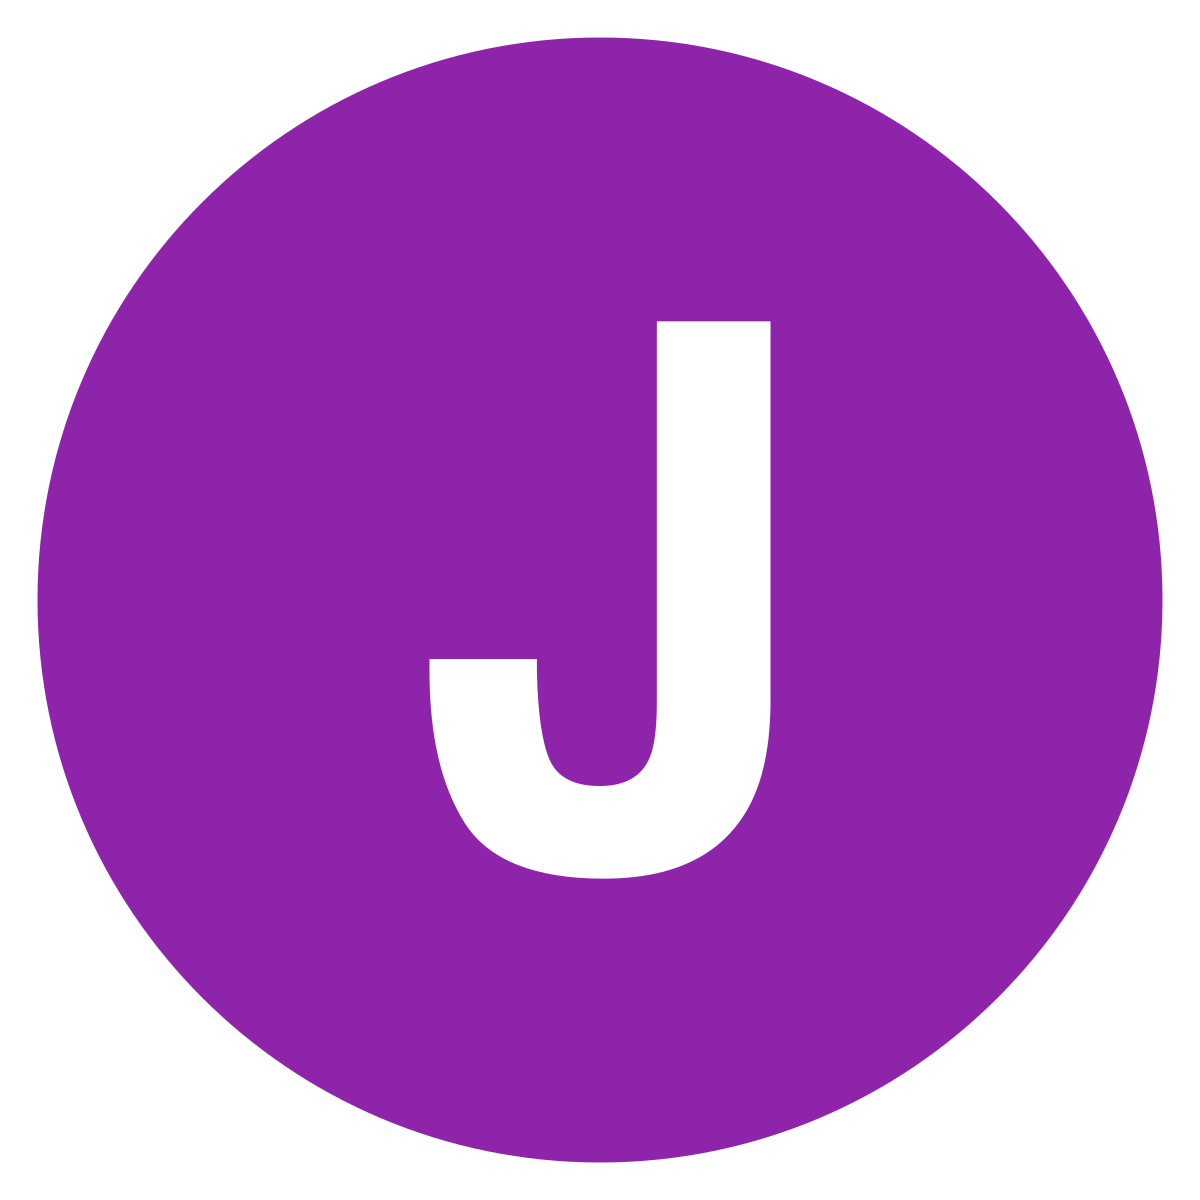 http://upload.wikimedia.org/wikipedia/commons/thumb/0/0c/Eo_circle_purple_letter-j.svg/1200px-Eo_circle_purple_letter-j.svg.png